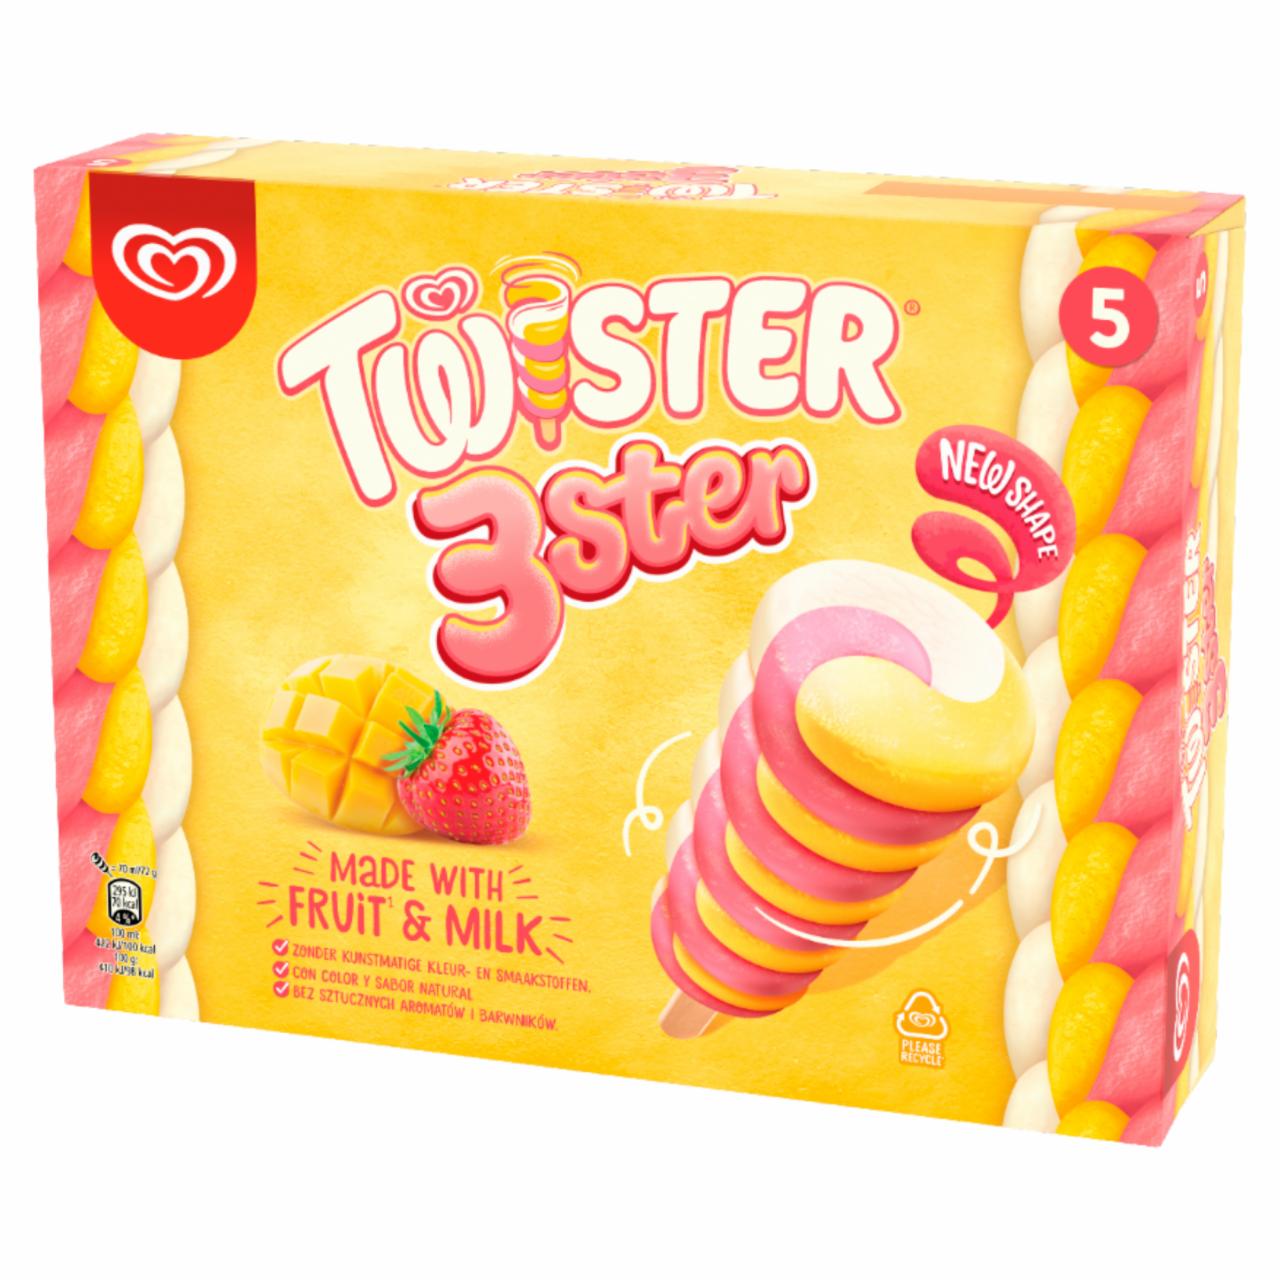 Zdjęcia - Twister 3ster Lody 350 ml (5 sztuk)